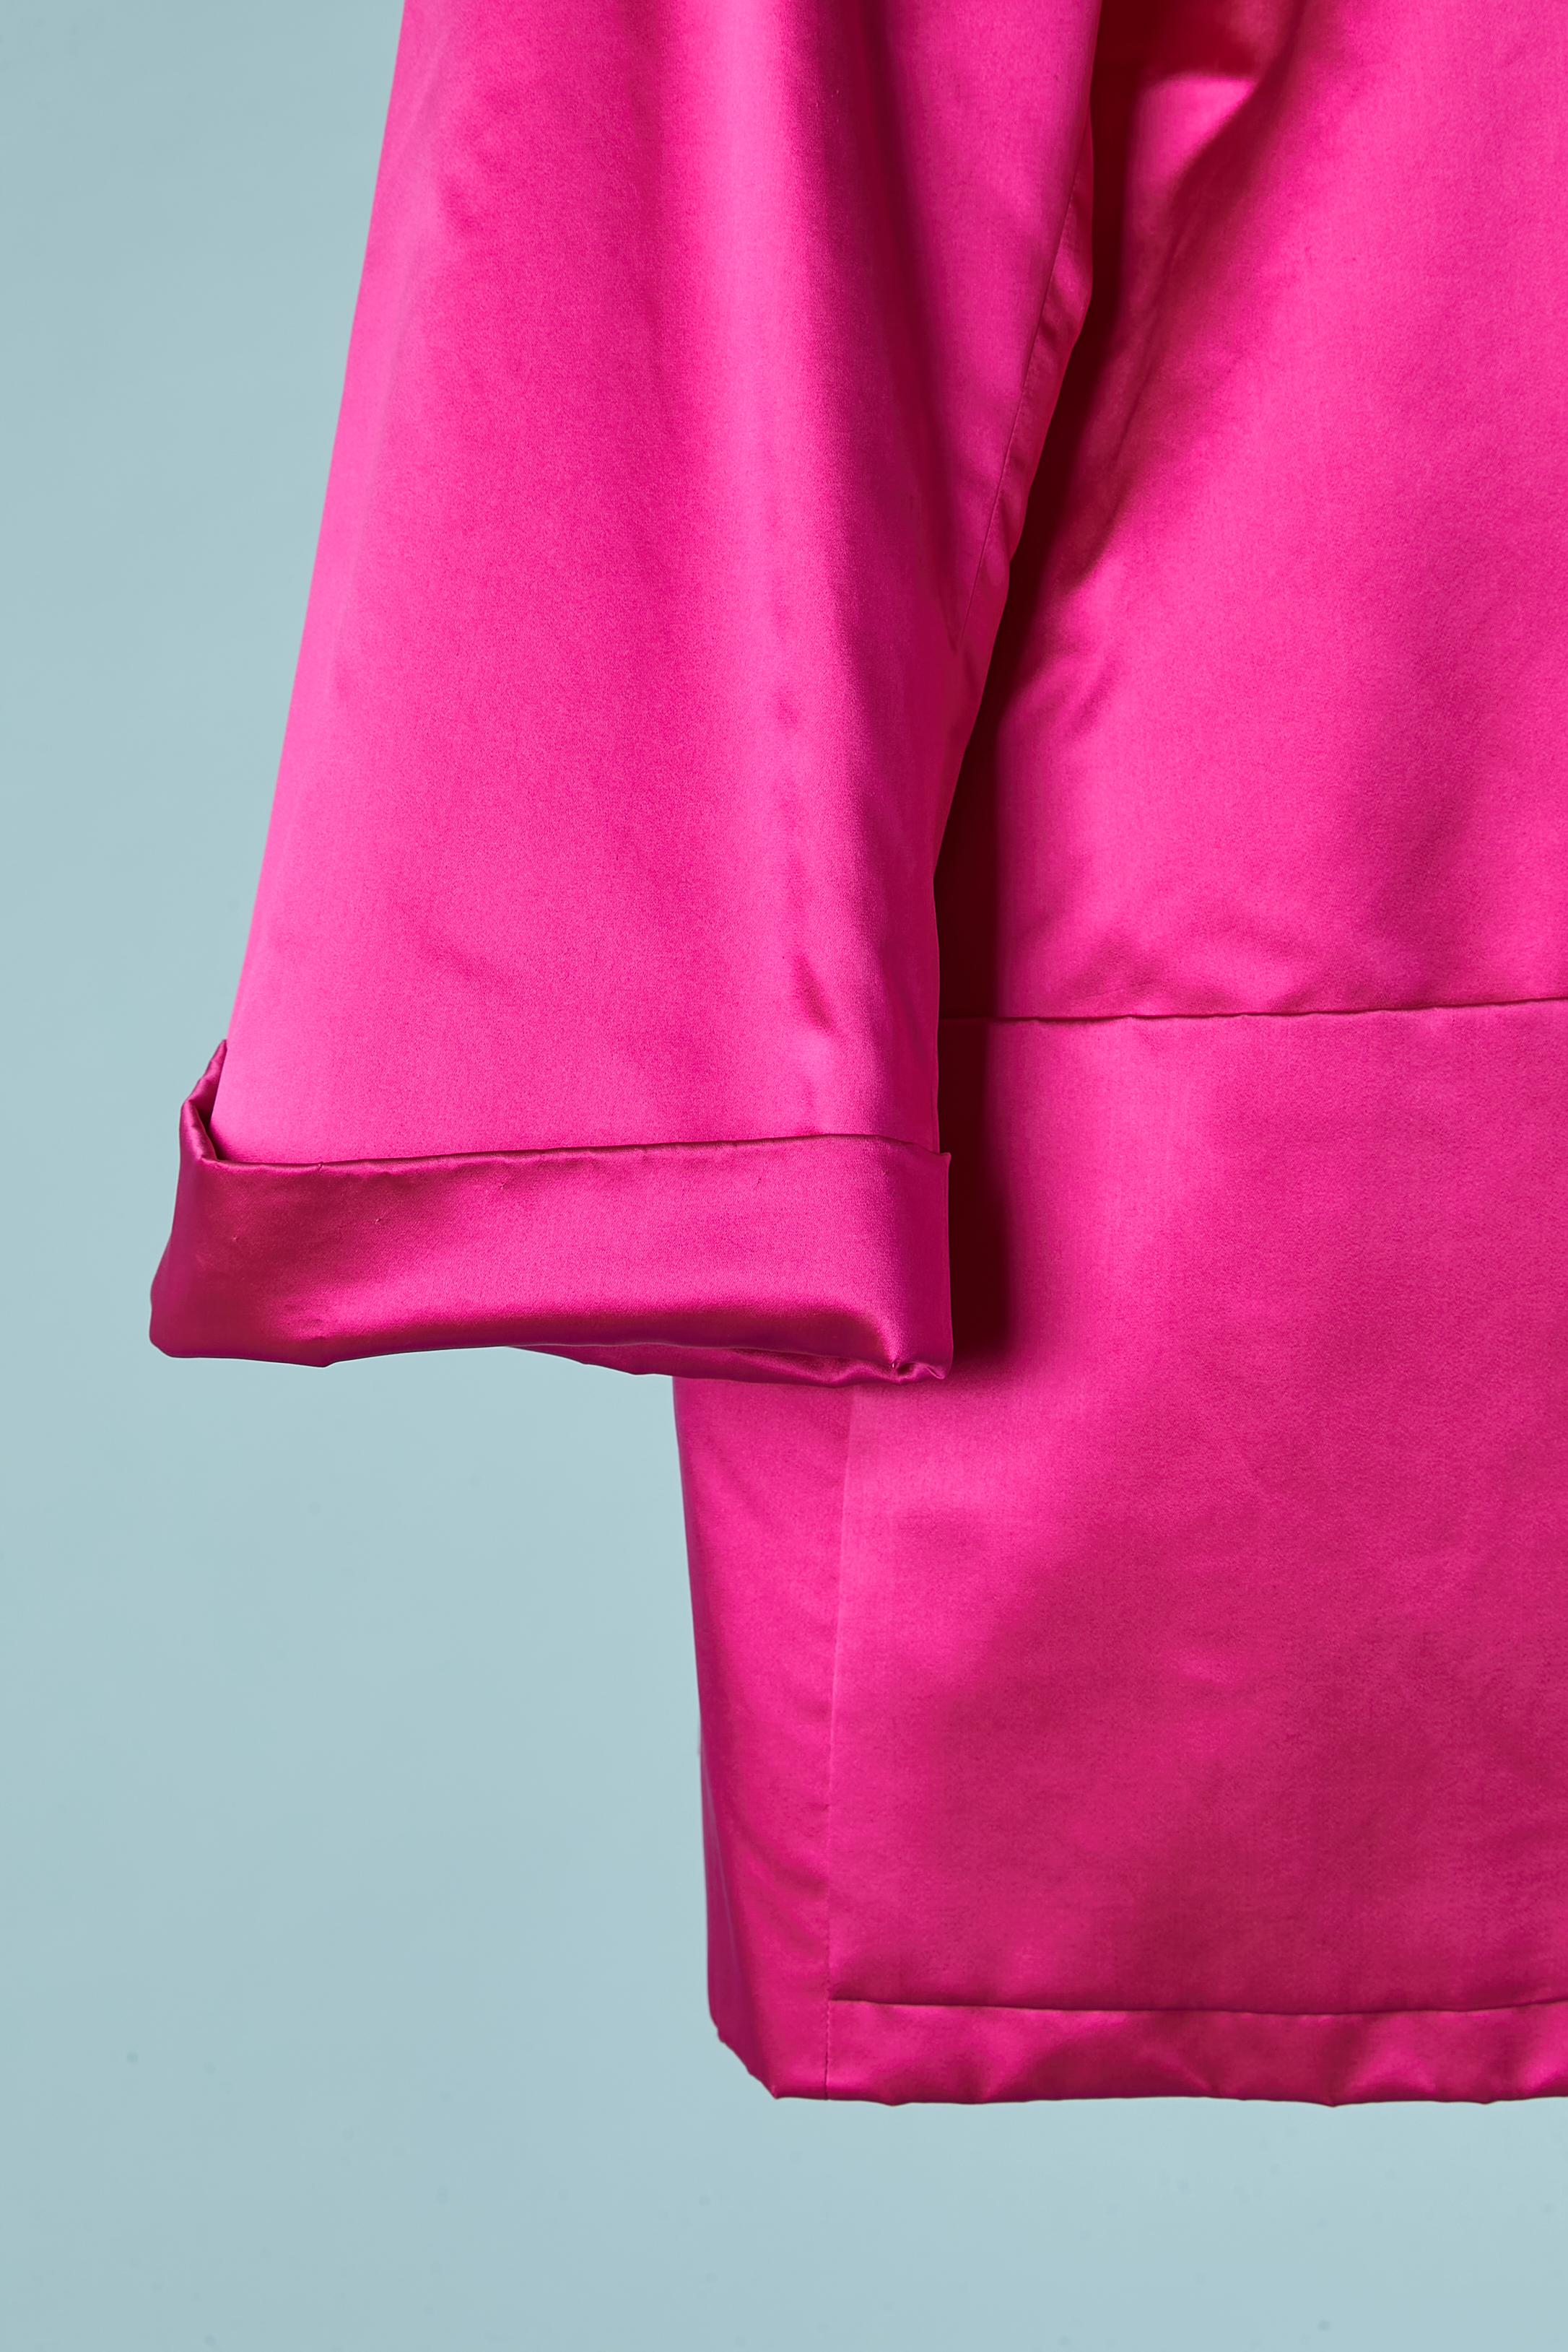 Women's Fushia satin evening jacket with rhinestone button Cavalli Faenza Circa 1960's  For Sale